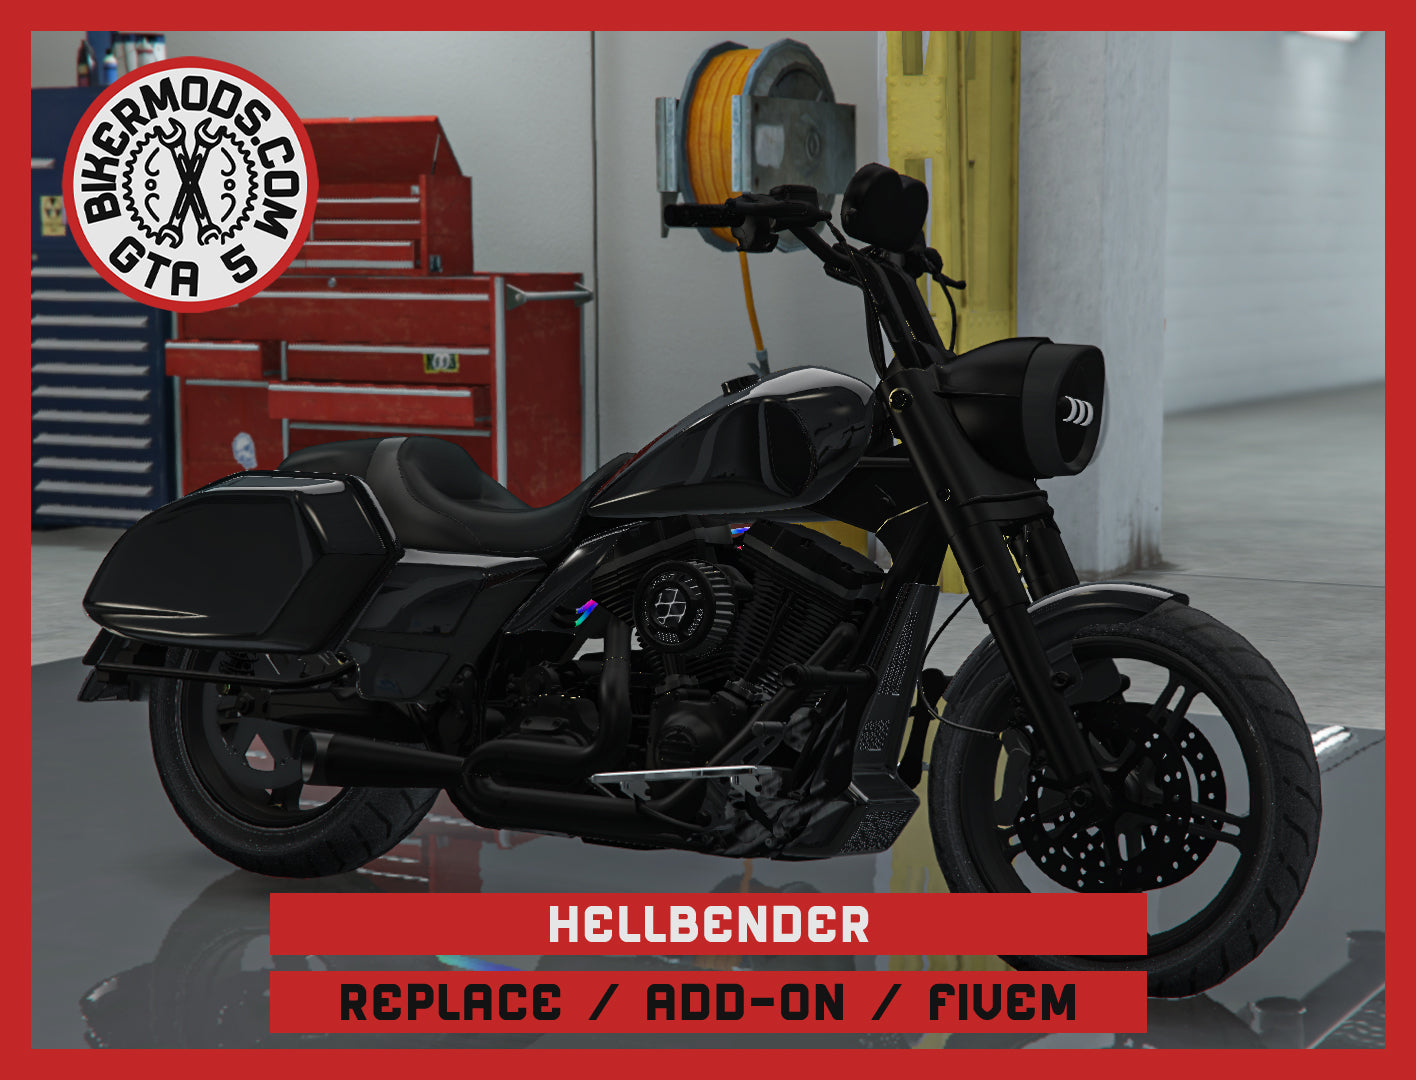 Hellbender (Replace / Add On / FiveM) 298k Poly (Animated RGB Lights)